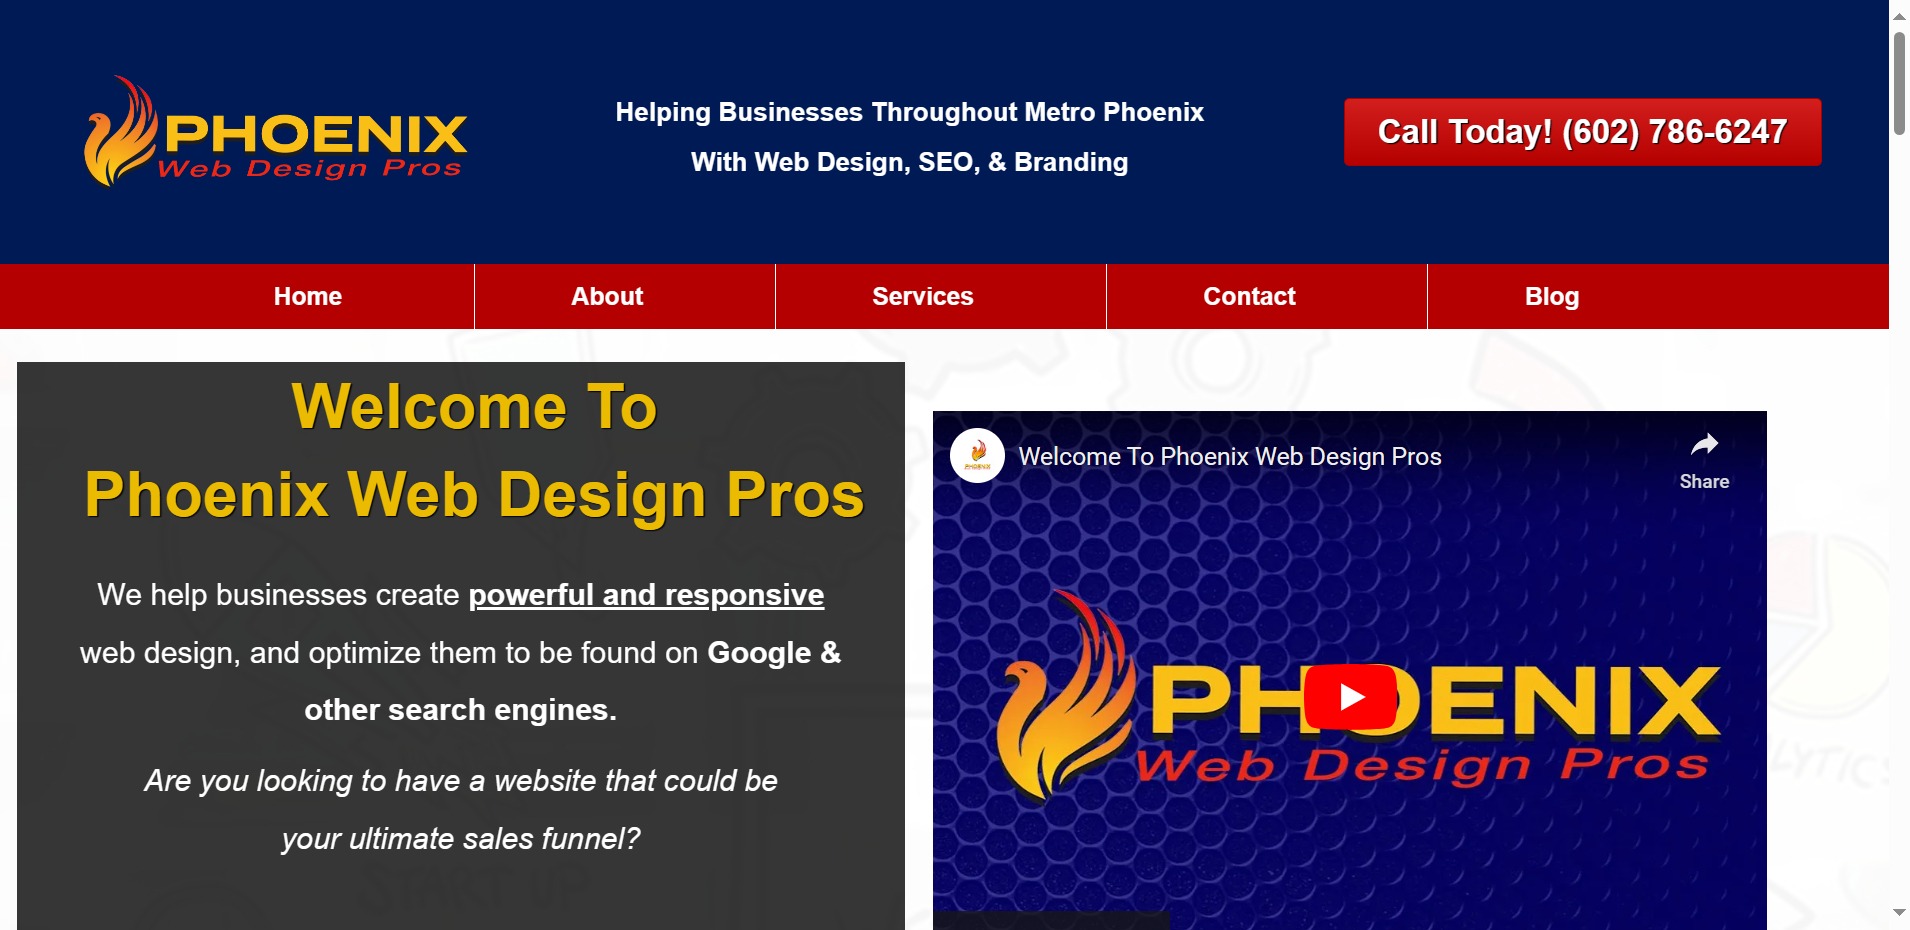 Phoenix Web Design Pros